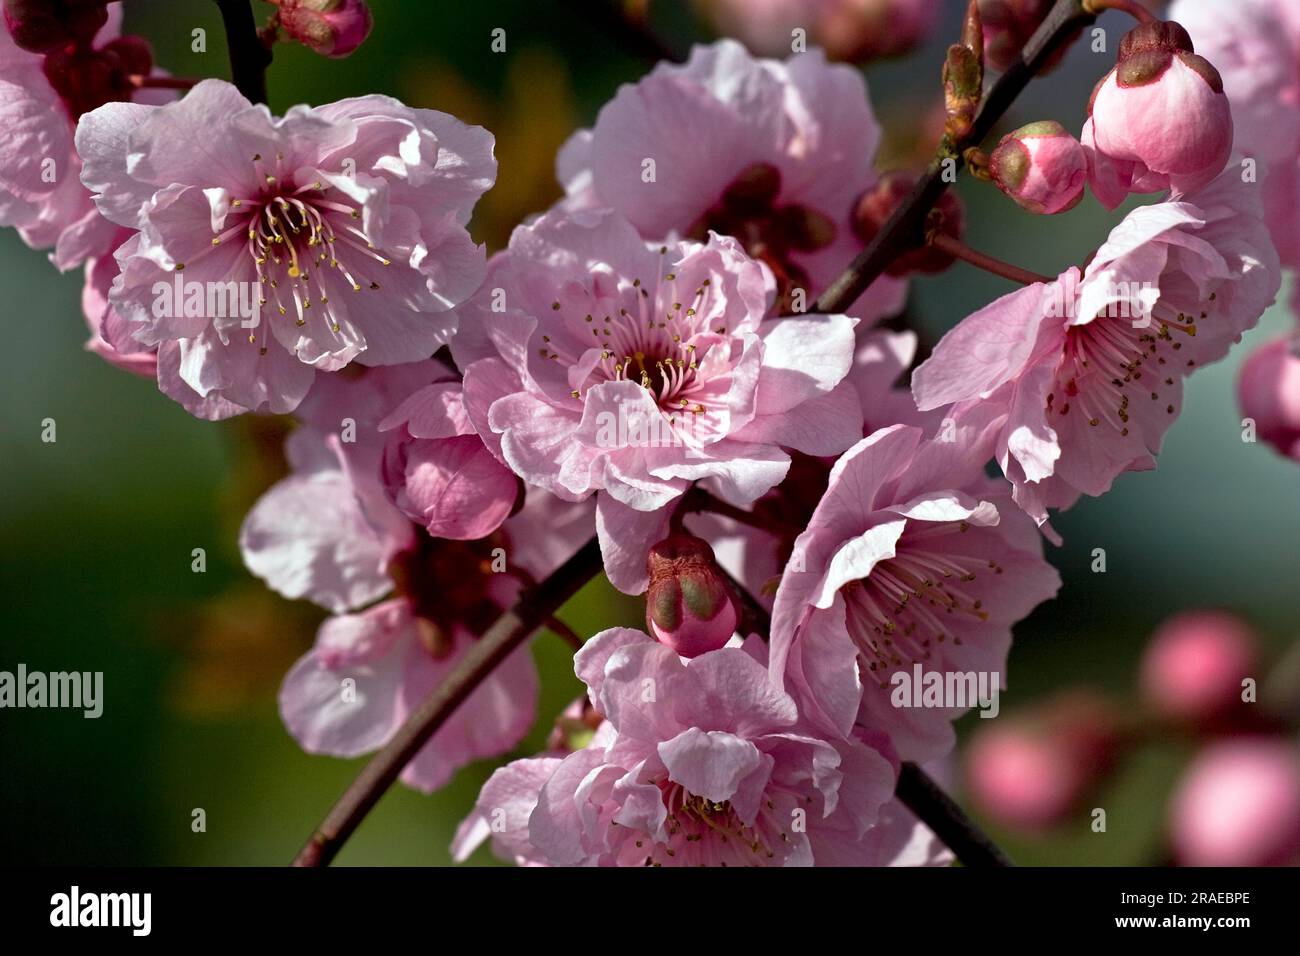 Blood plum, plum blossom, myrobolane (Prunus cerasifera) Stock Photo